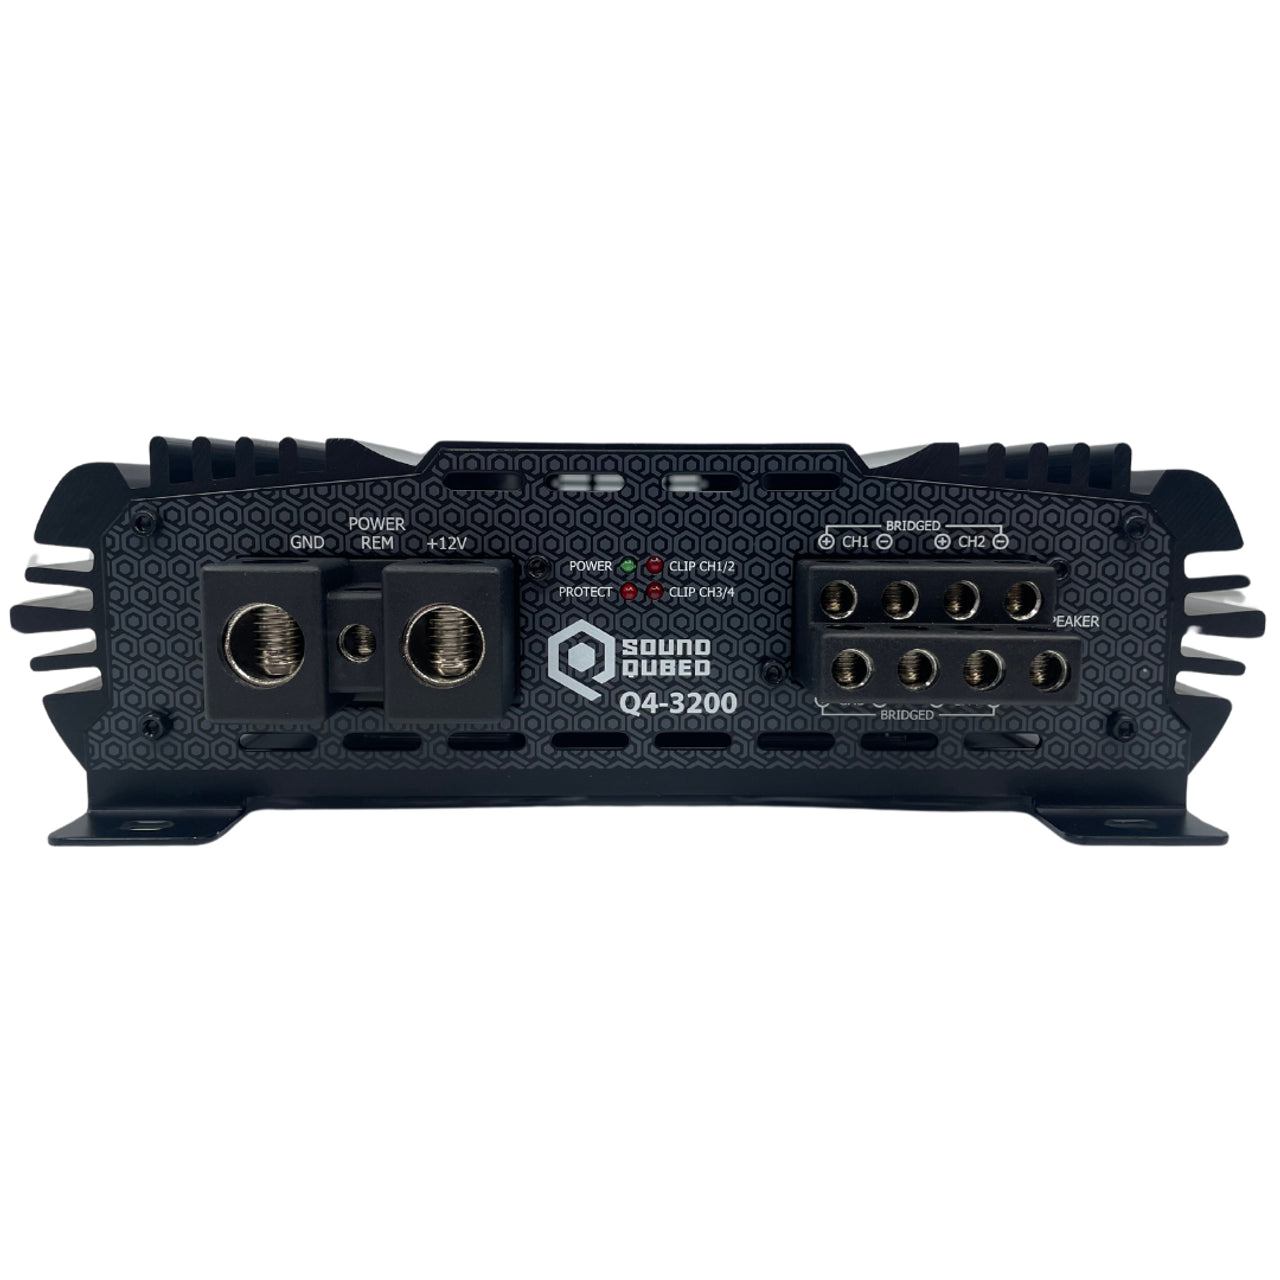 SOUNDQUBED Q4-3200 Q Series 3200 Watts 4 Channel Amplifier